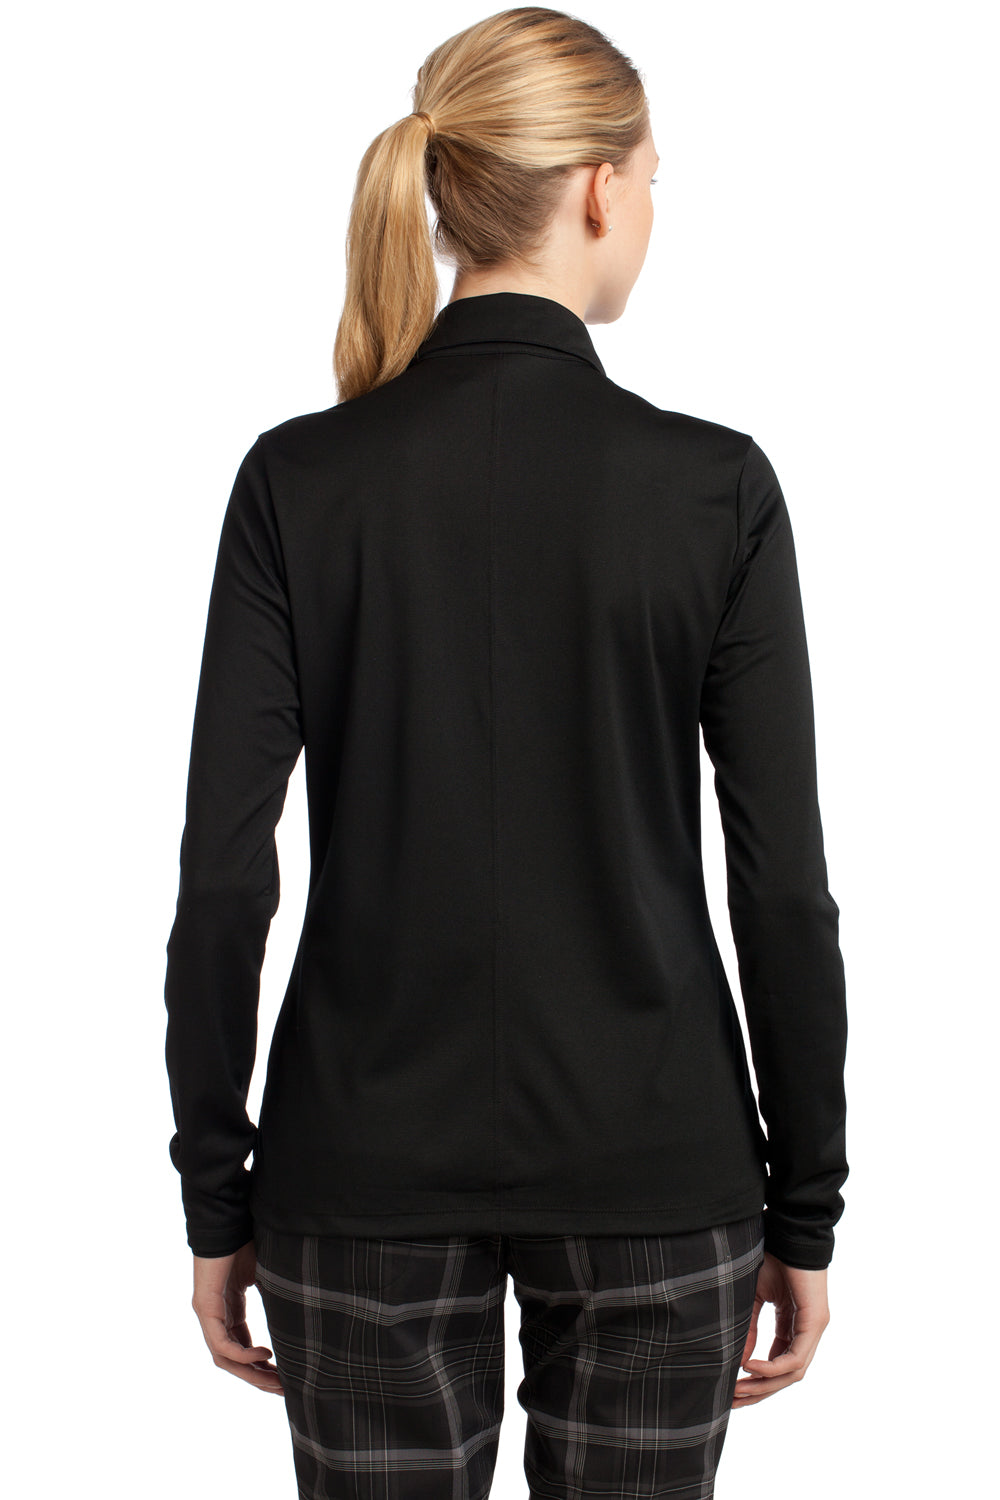 Nike 545322 Womens Stretch Tech Dri-Fit Moisture Wicking Long Sleeve Polo Shirt Black Model Back